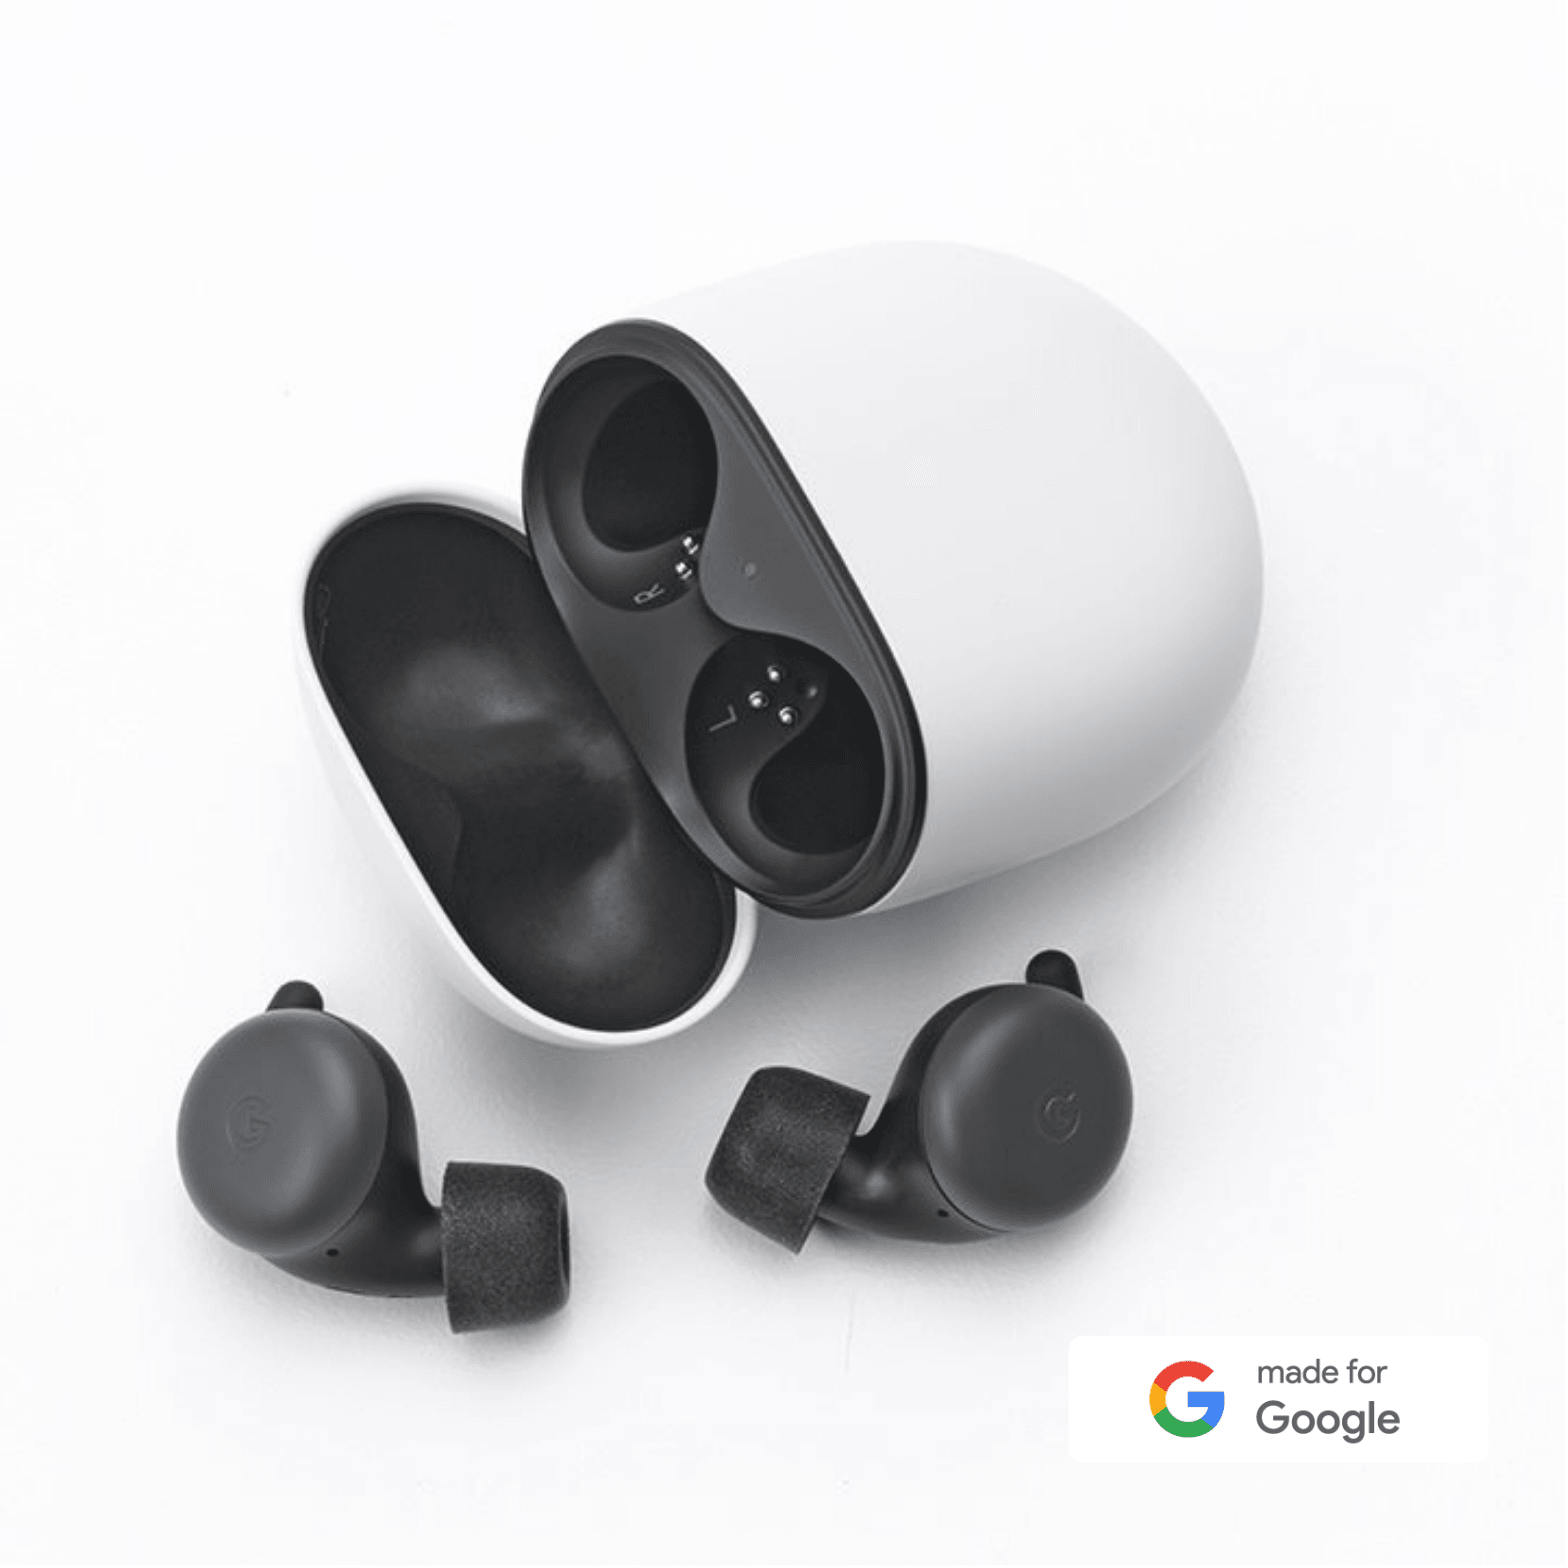 Google Pixel Buds A-Series review: Impressive sound, super comfortable fit